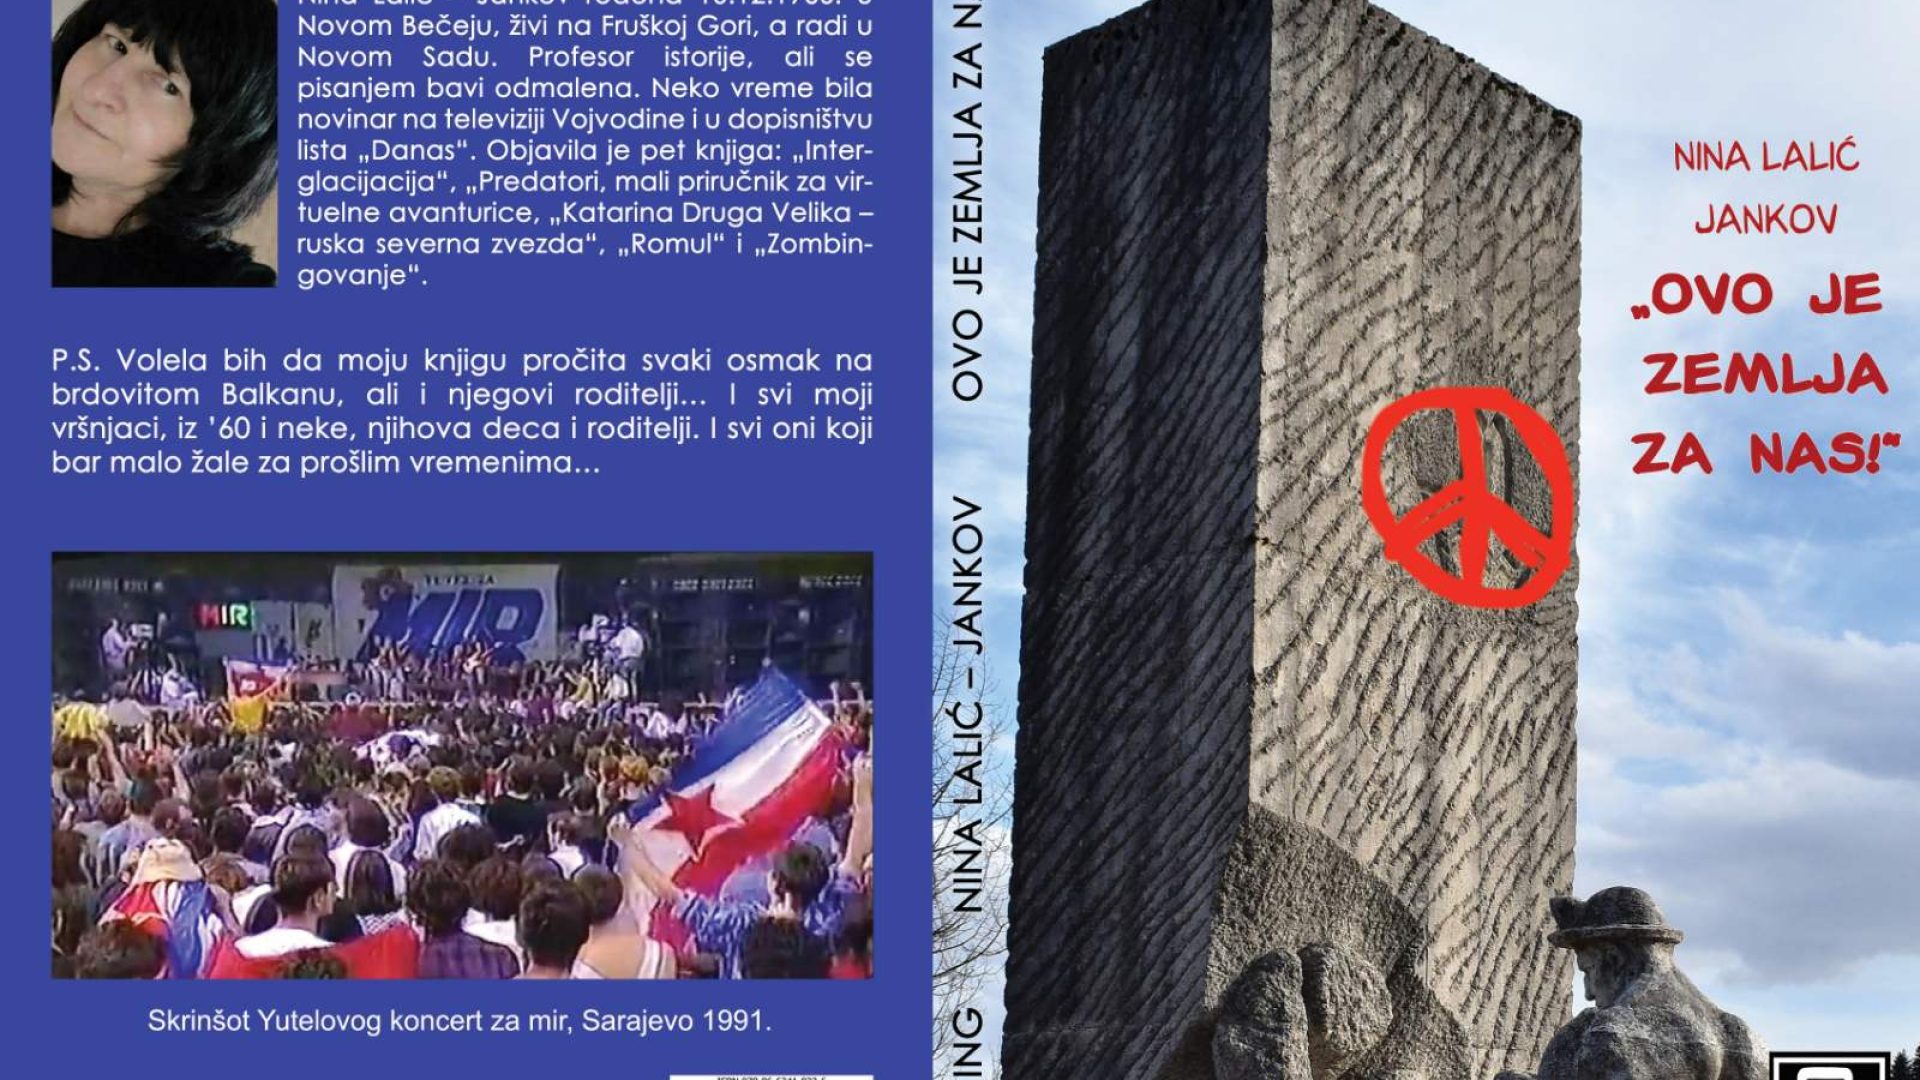 08. 12. Promocija knjige Nine Lalić Jankov “Ovo je zemlja za nas”